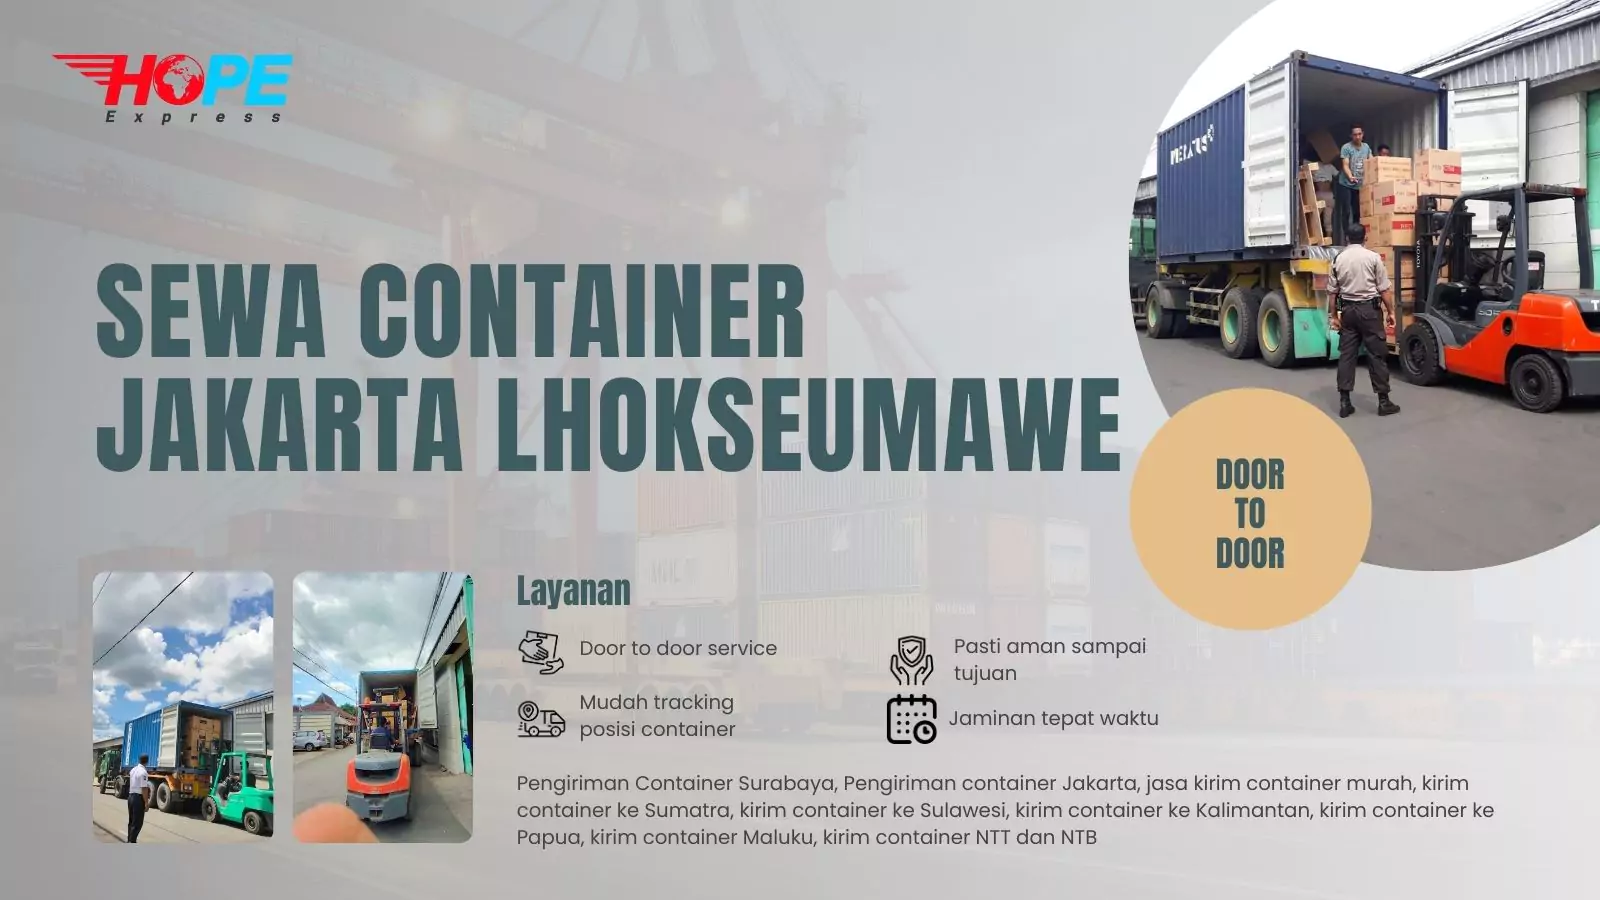 Sewa Container Jakarta Lhokseumawe